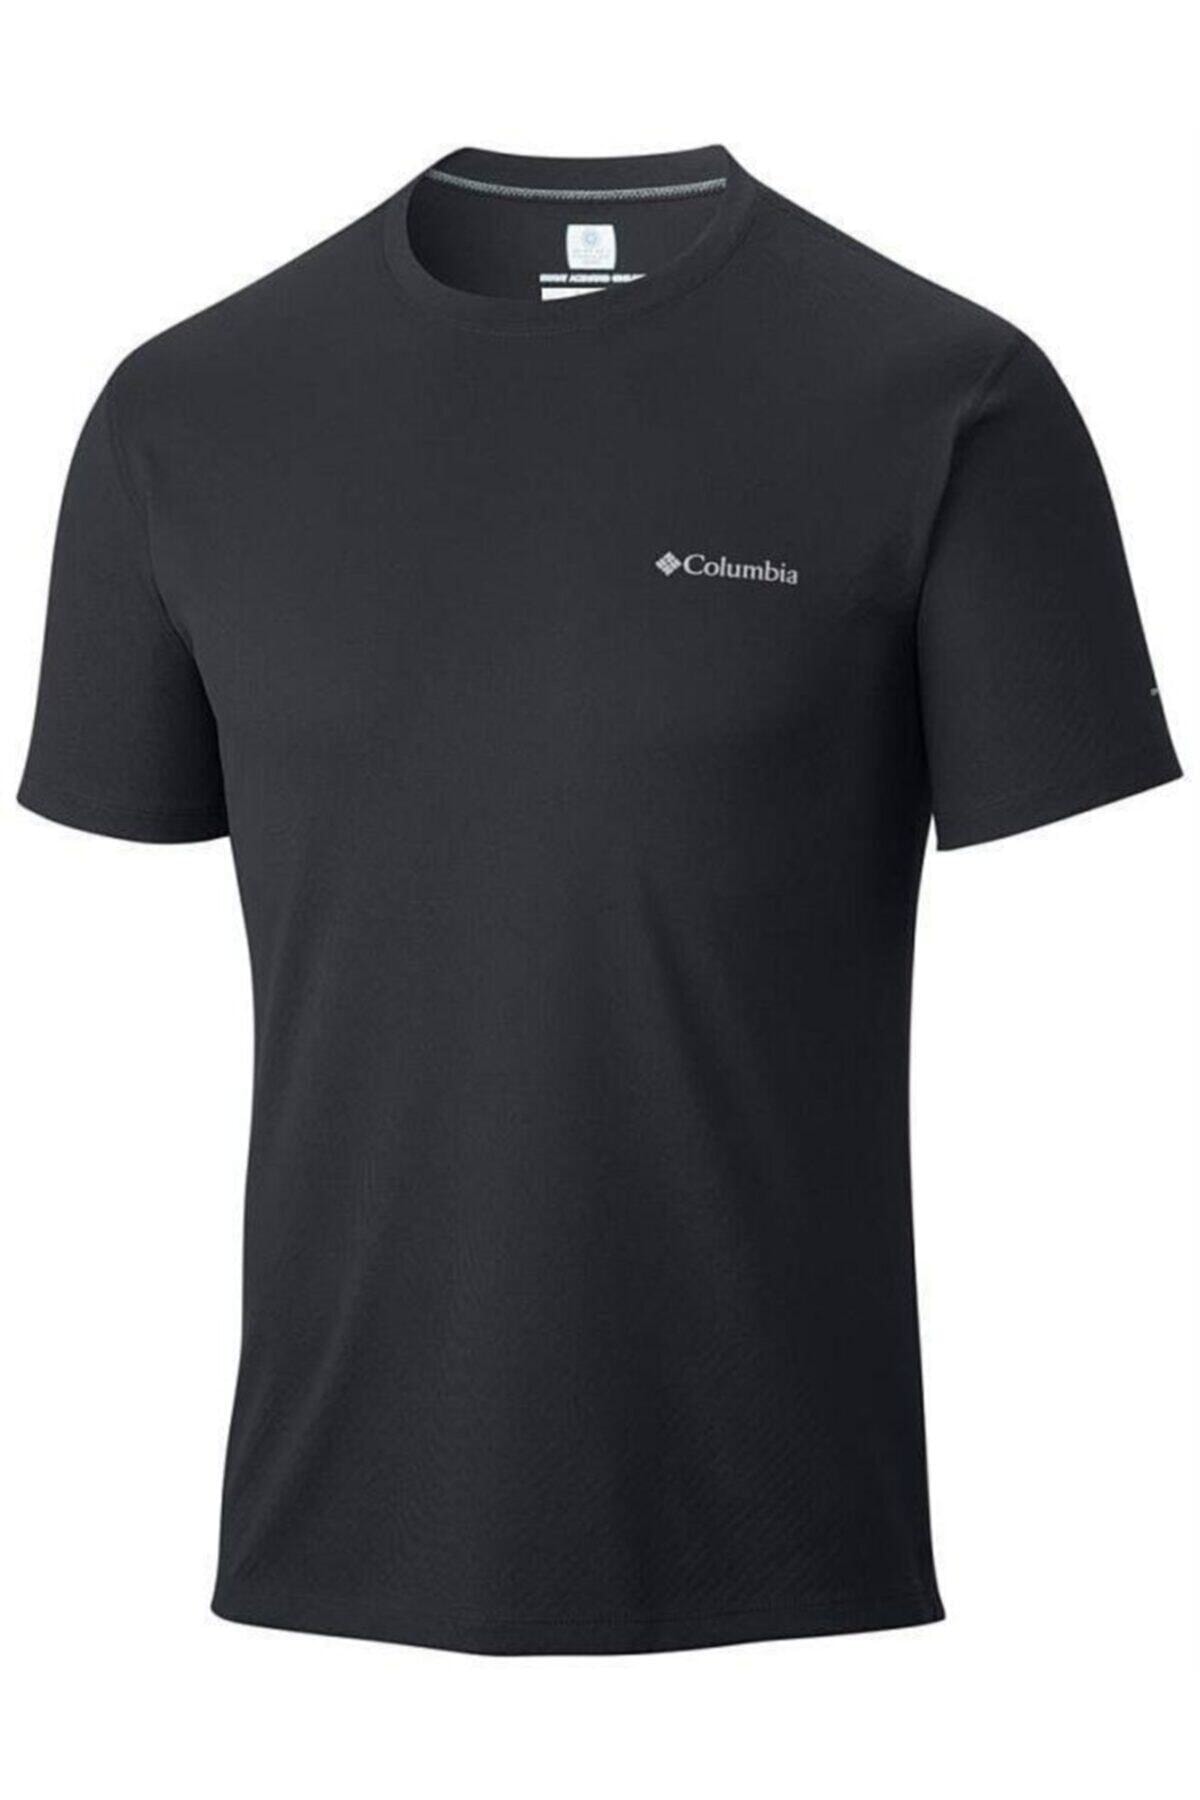 Columbia Zero Rules Short Sleeve Erkek T-shirt Am6084-010